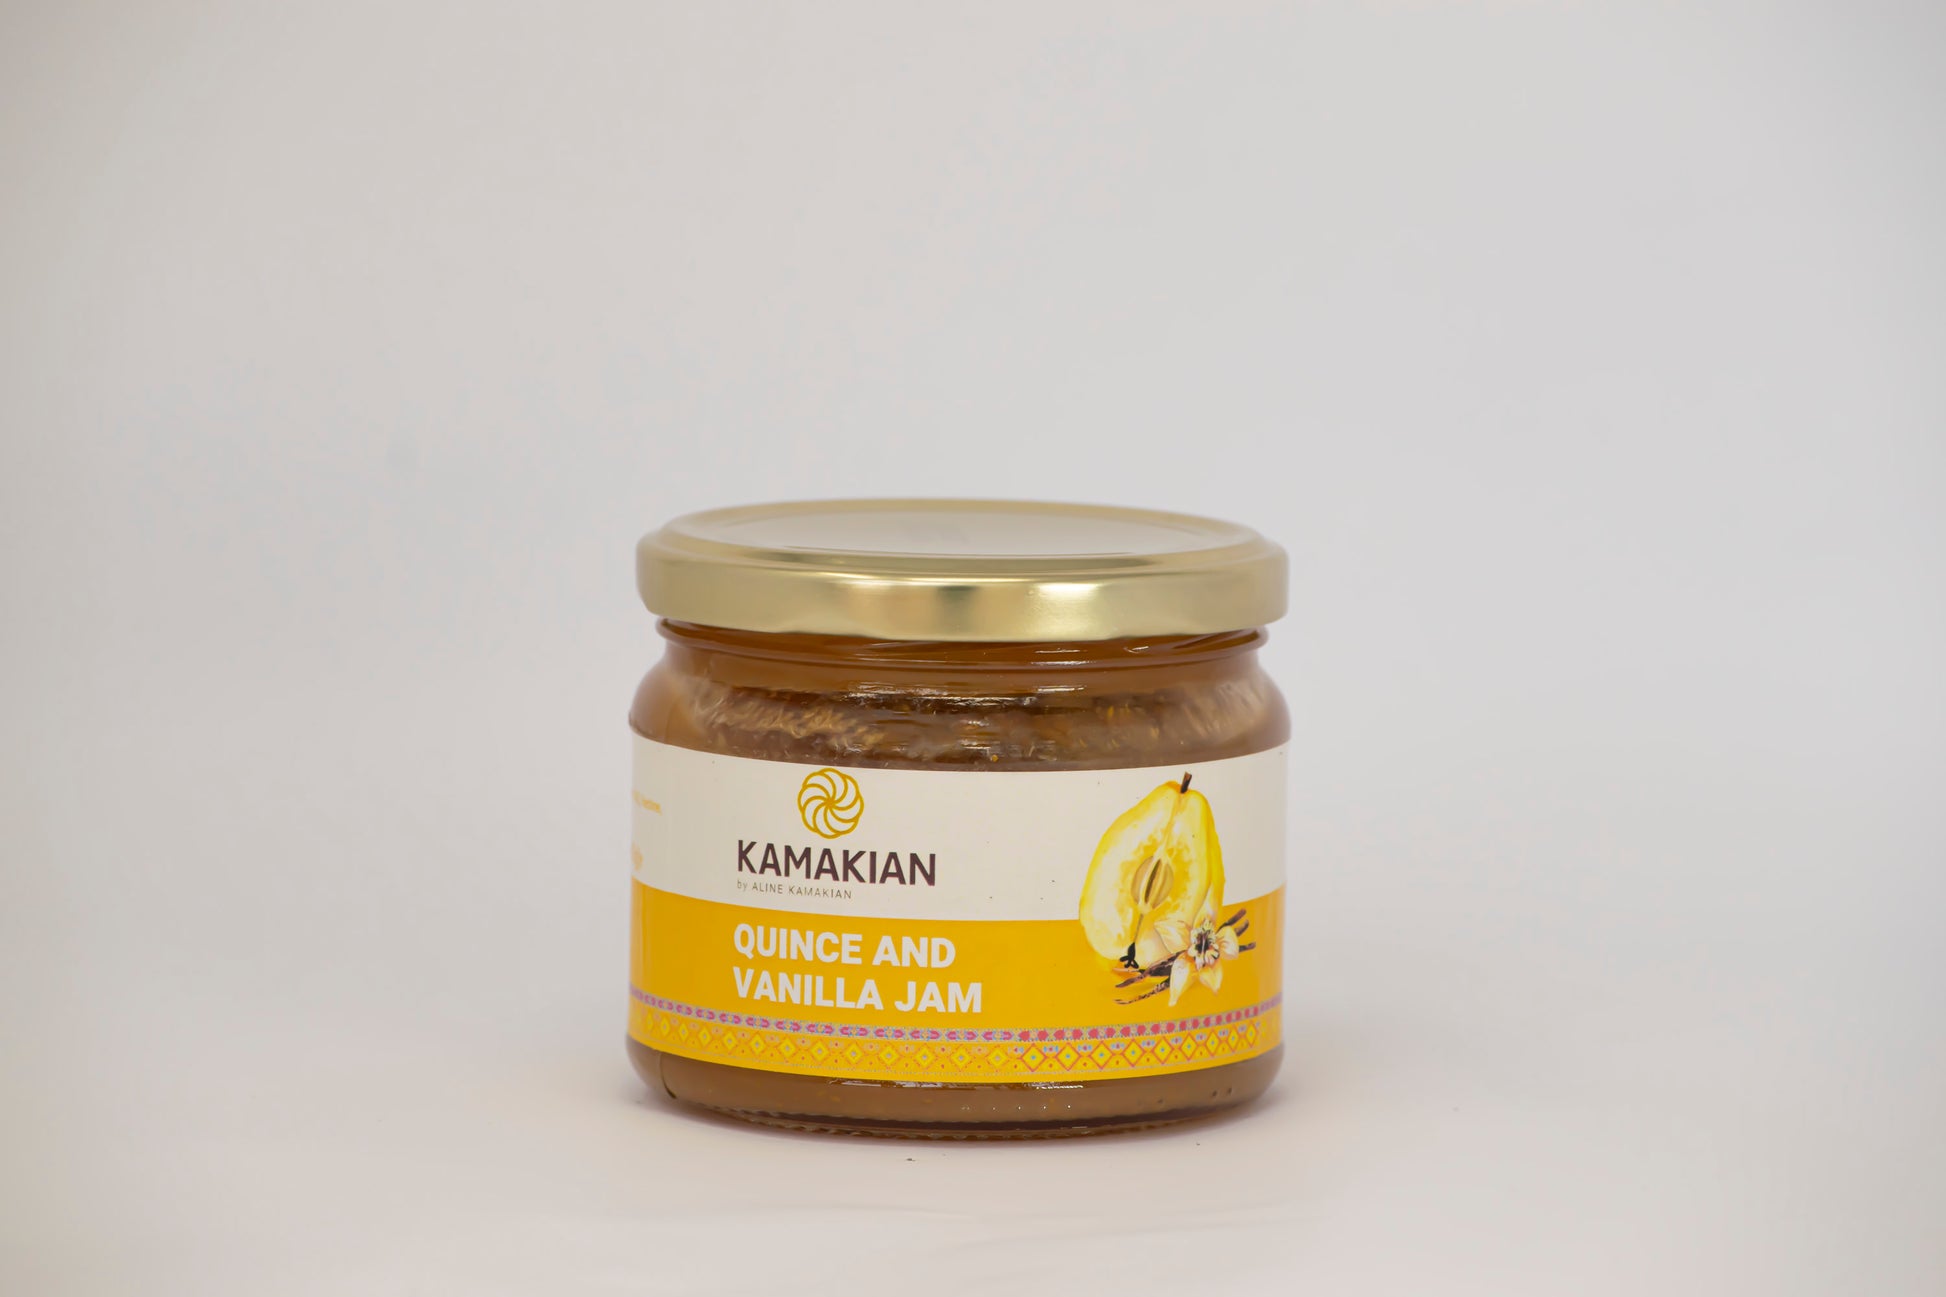 Quince & Vanilla Jam made in Lebanon